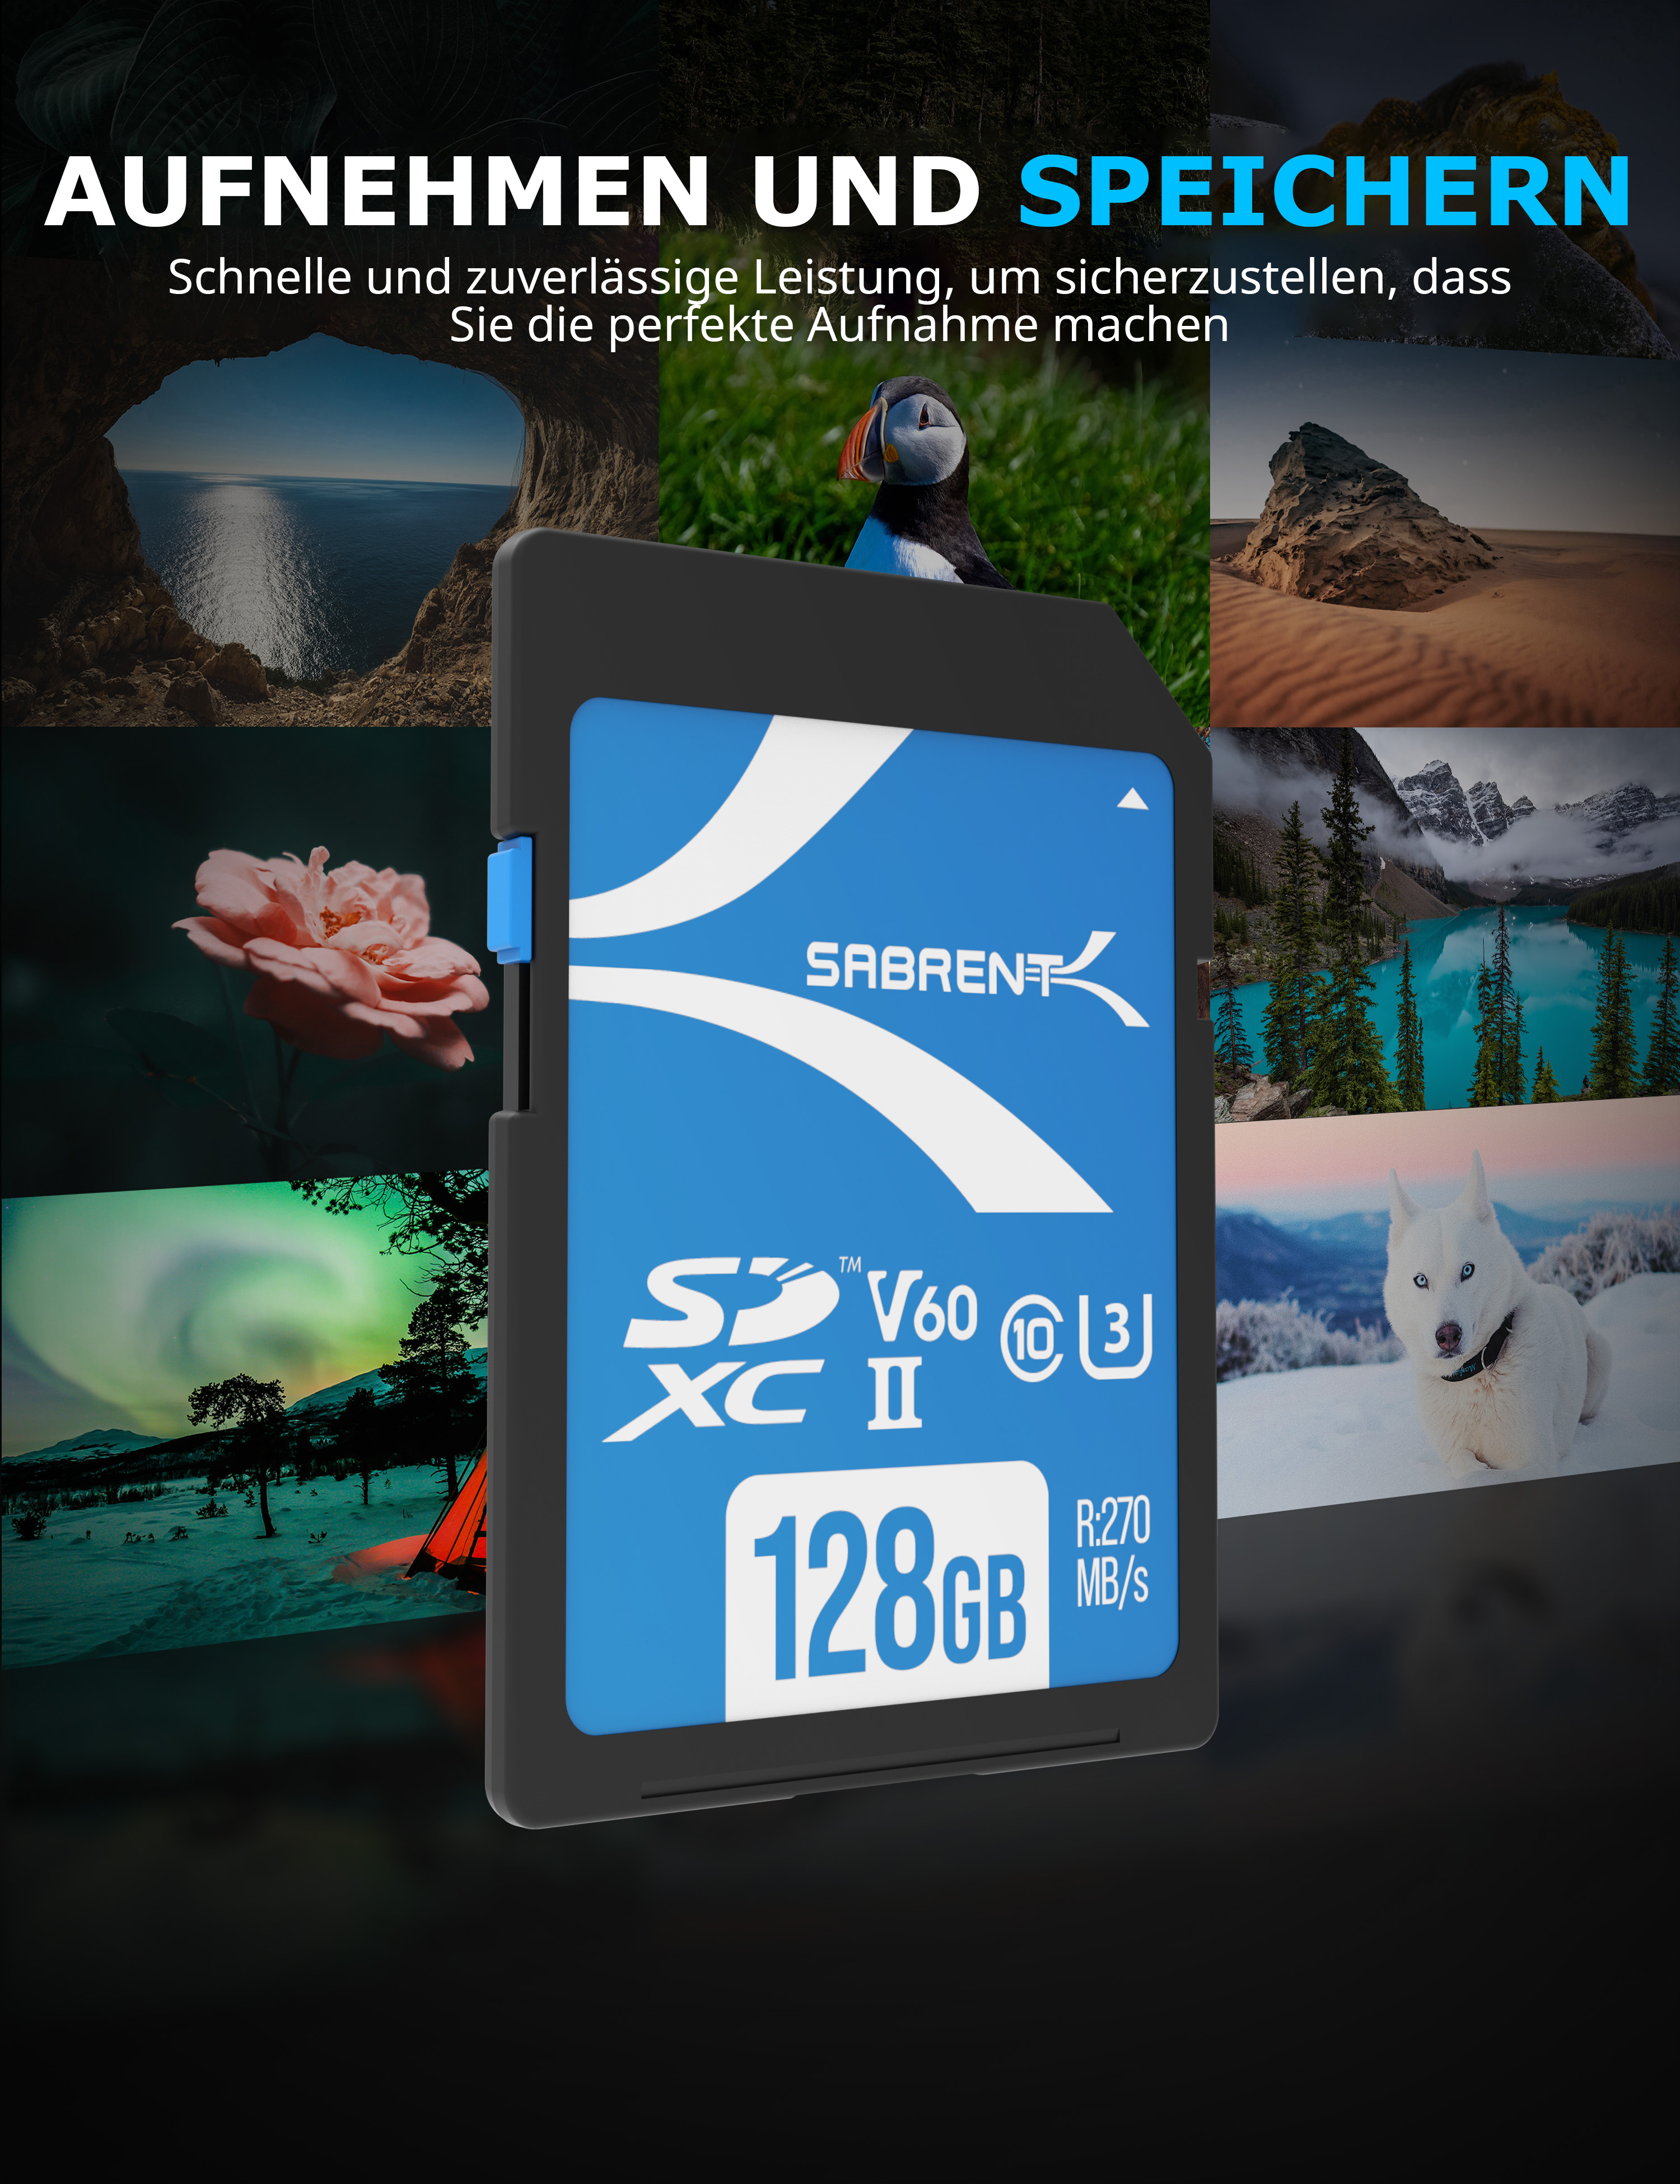 SABRENT V60 128GB SD 270 128 Karte, UHS-II, MB/s GB, SDXC SD